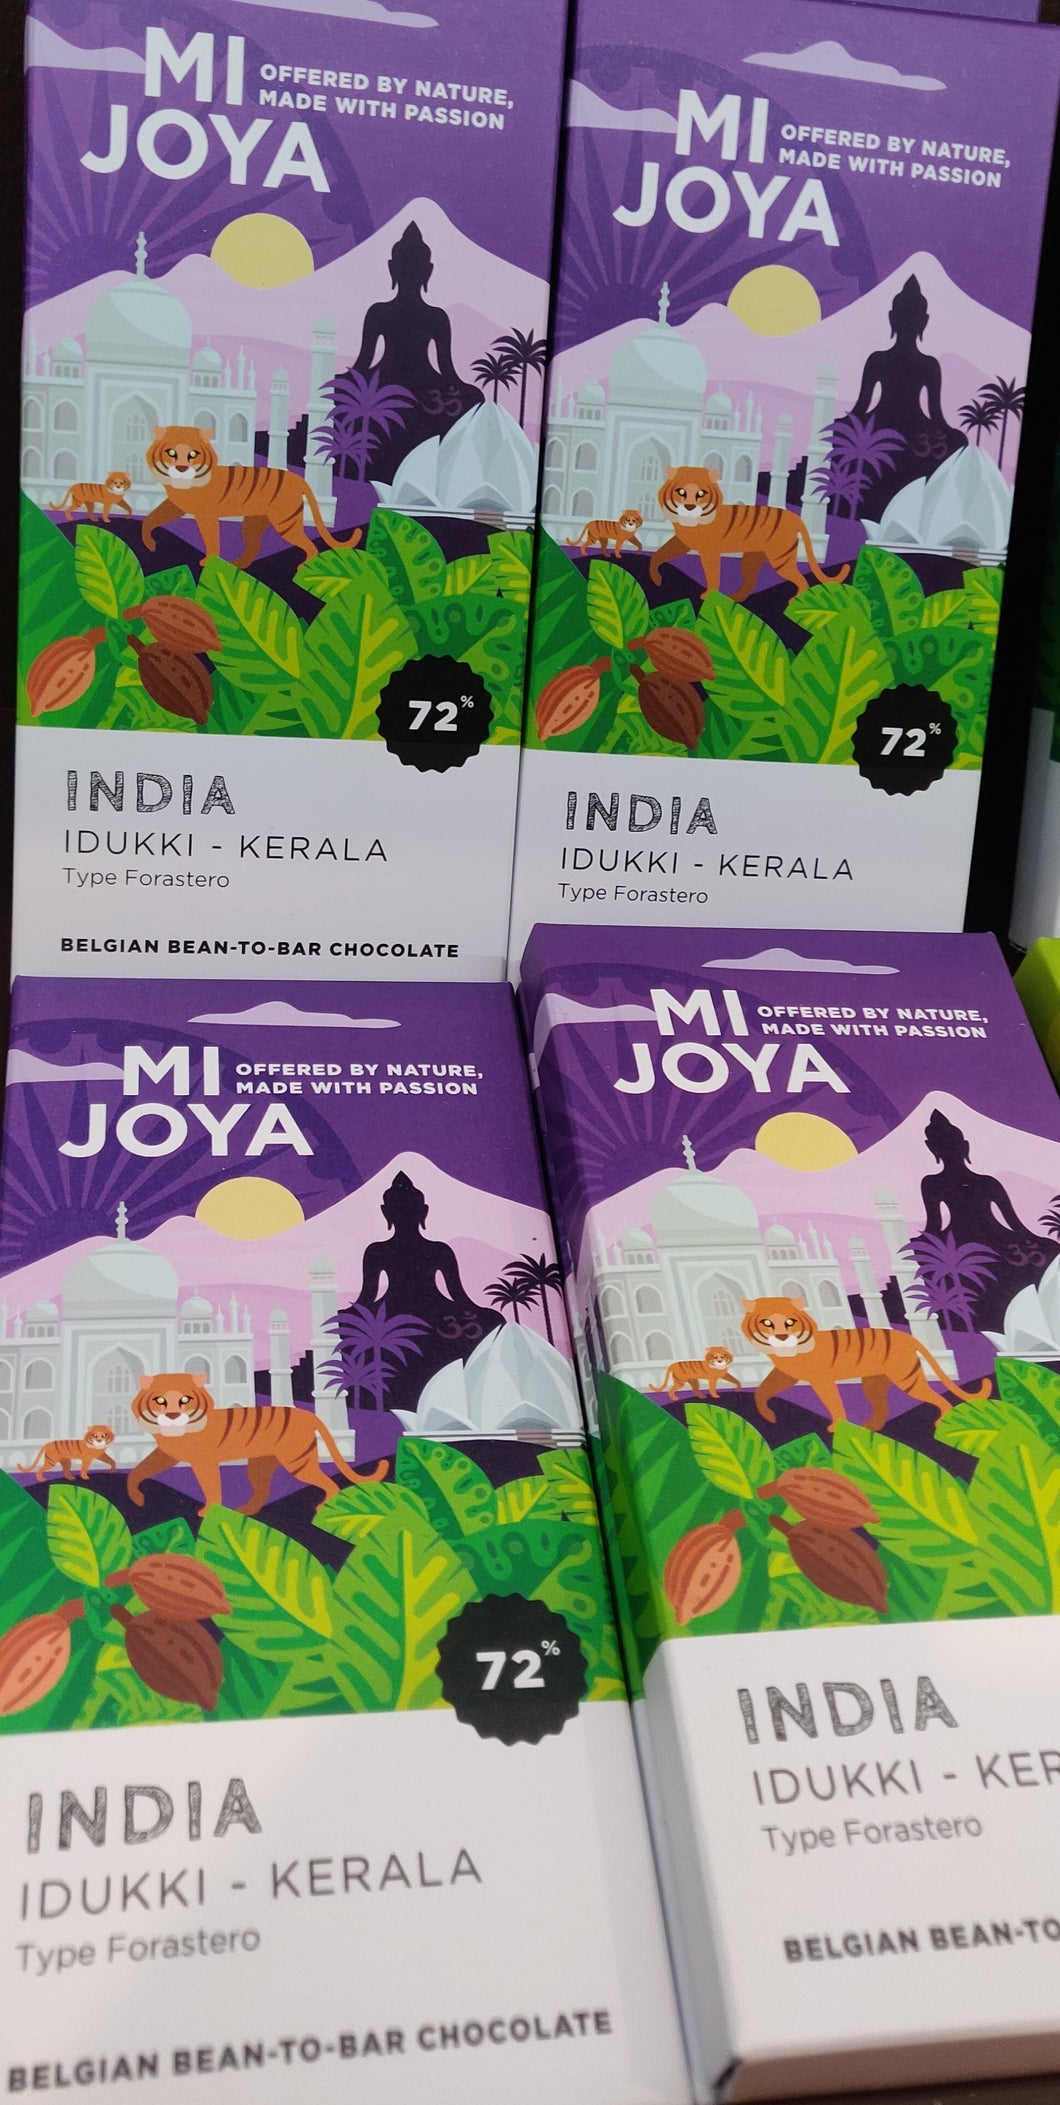 MI JOYA Tablette Beans to bars India Indukki - Kerala 72% - 75gr